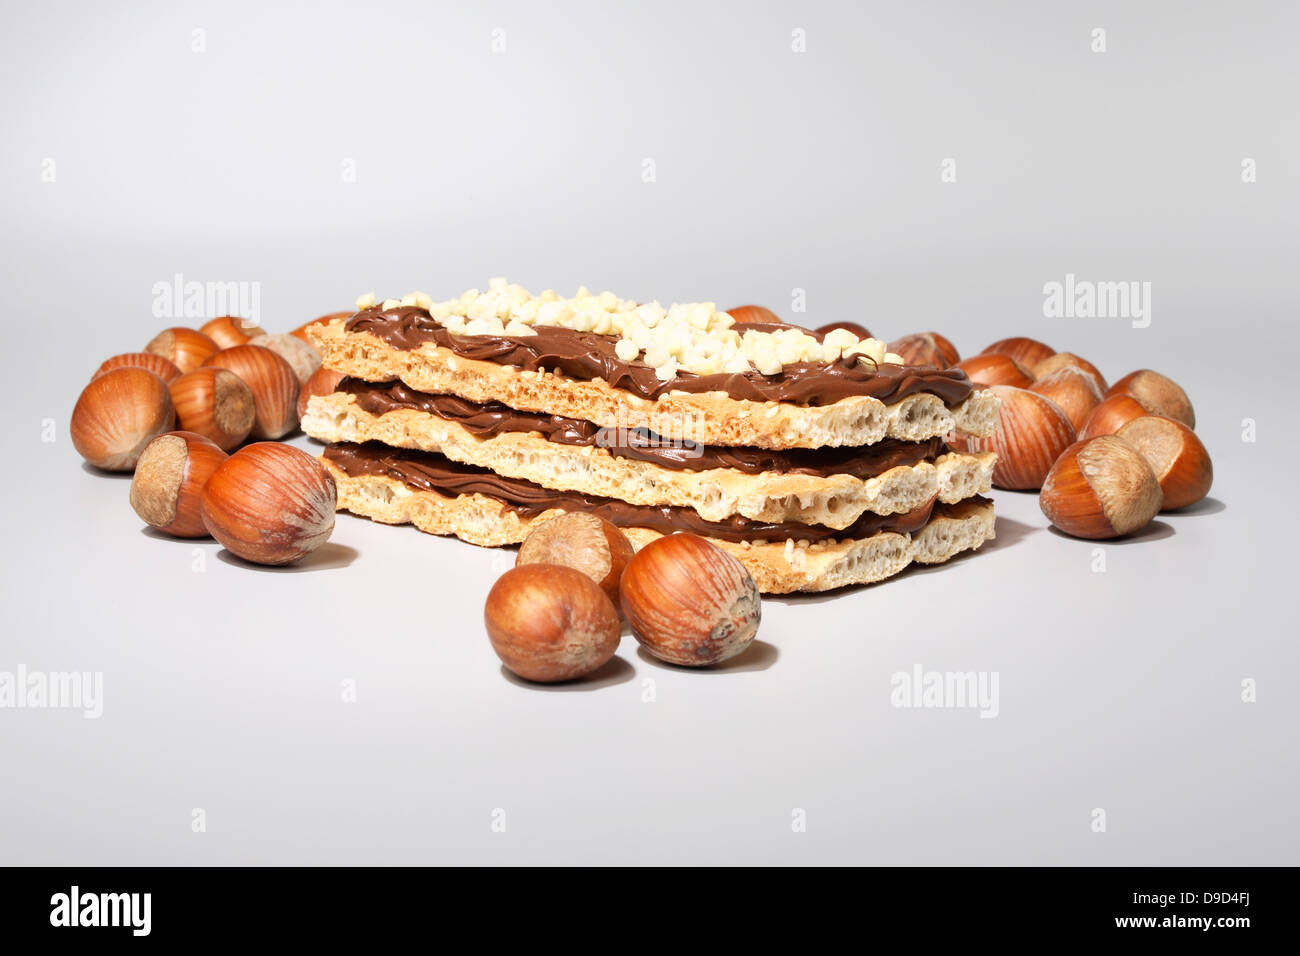 Nut nougat cuts with hazelnuts Stock Photo